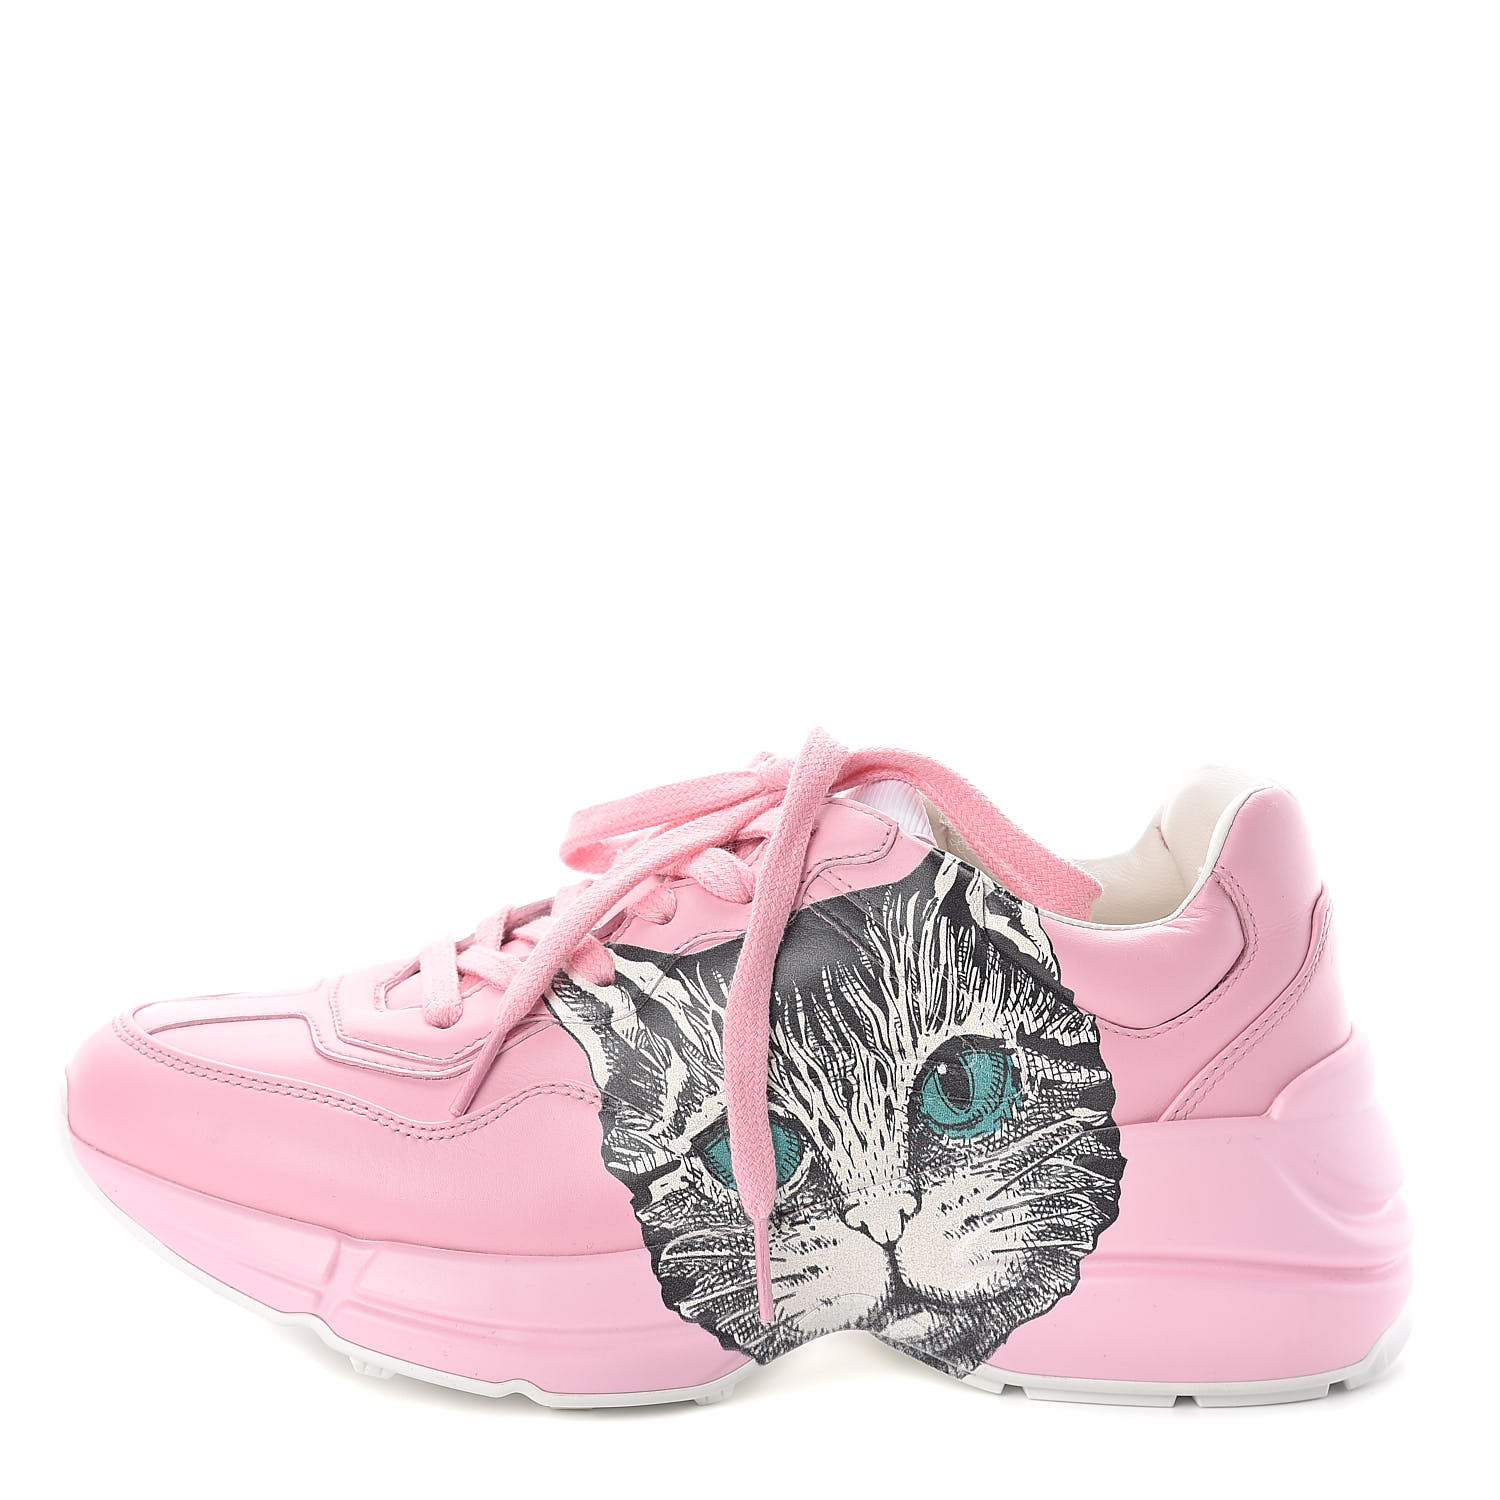 gucci cat sneakers